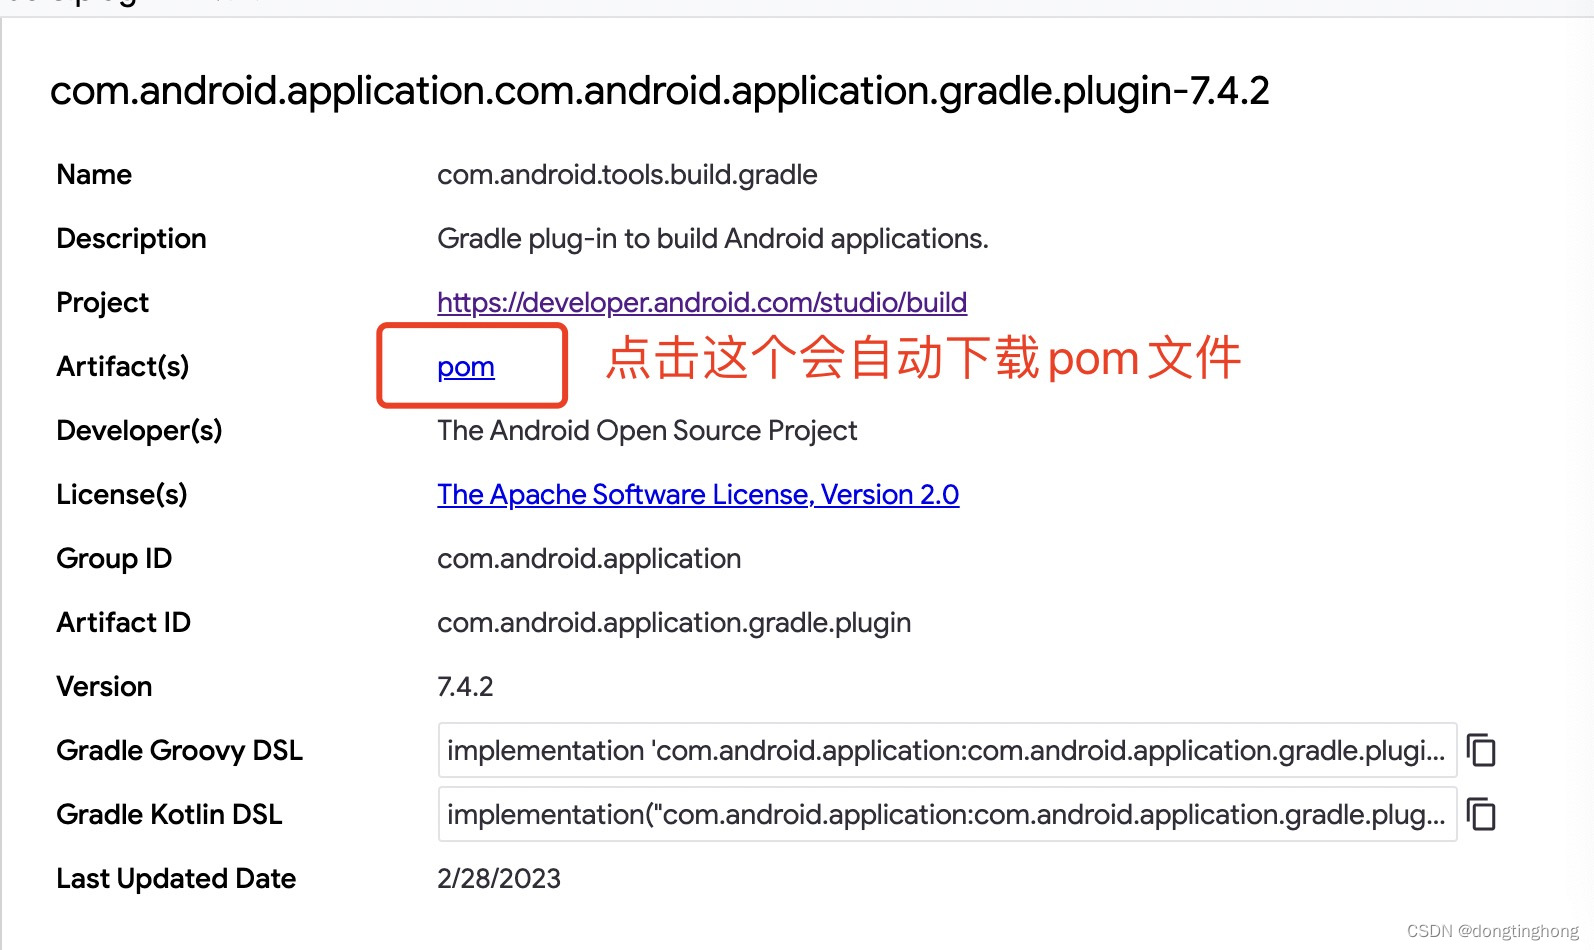 新版android studio gradle插件7.4.2.pom一直无法下载问题